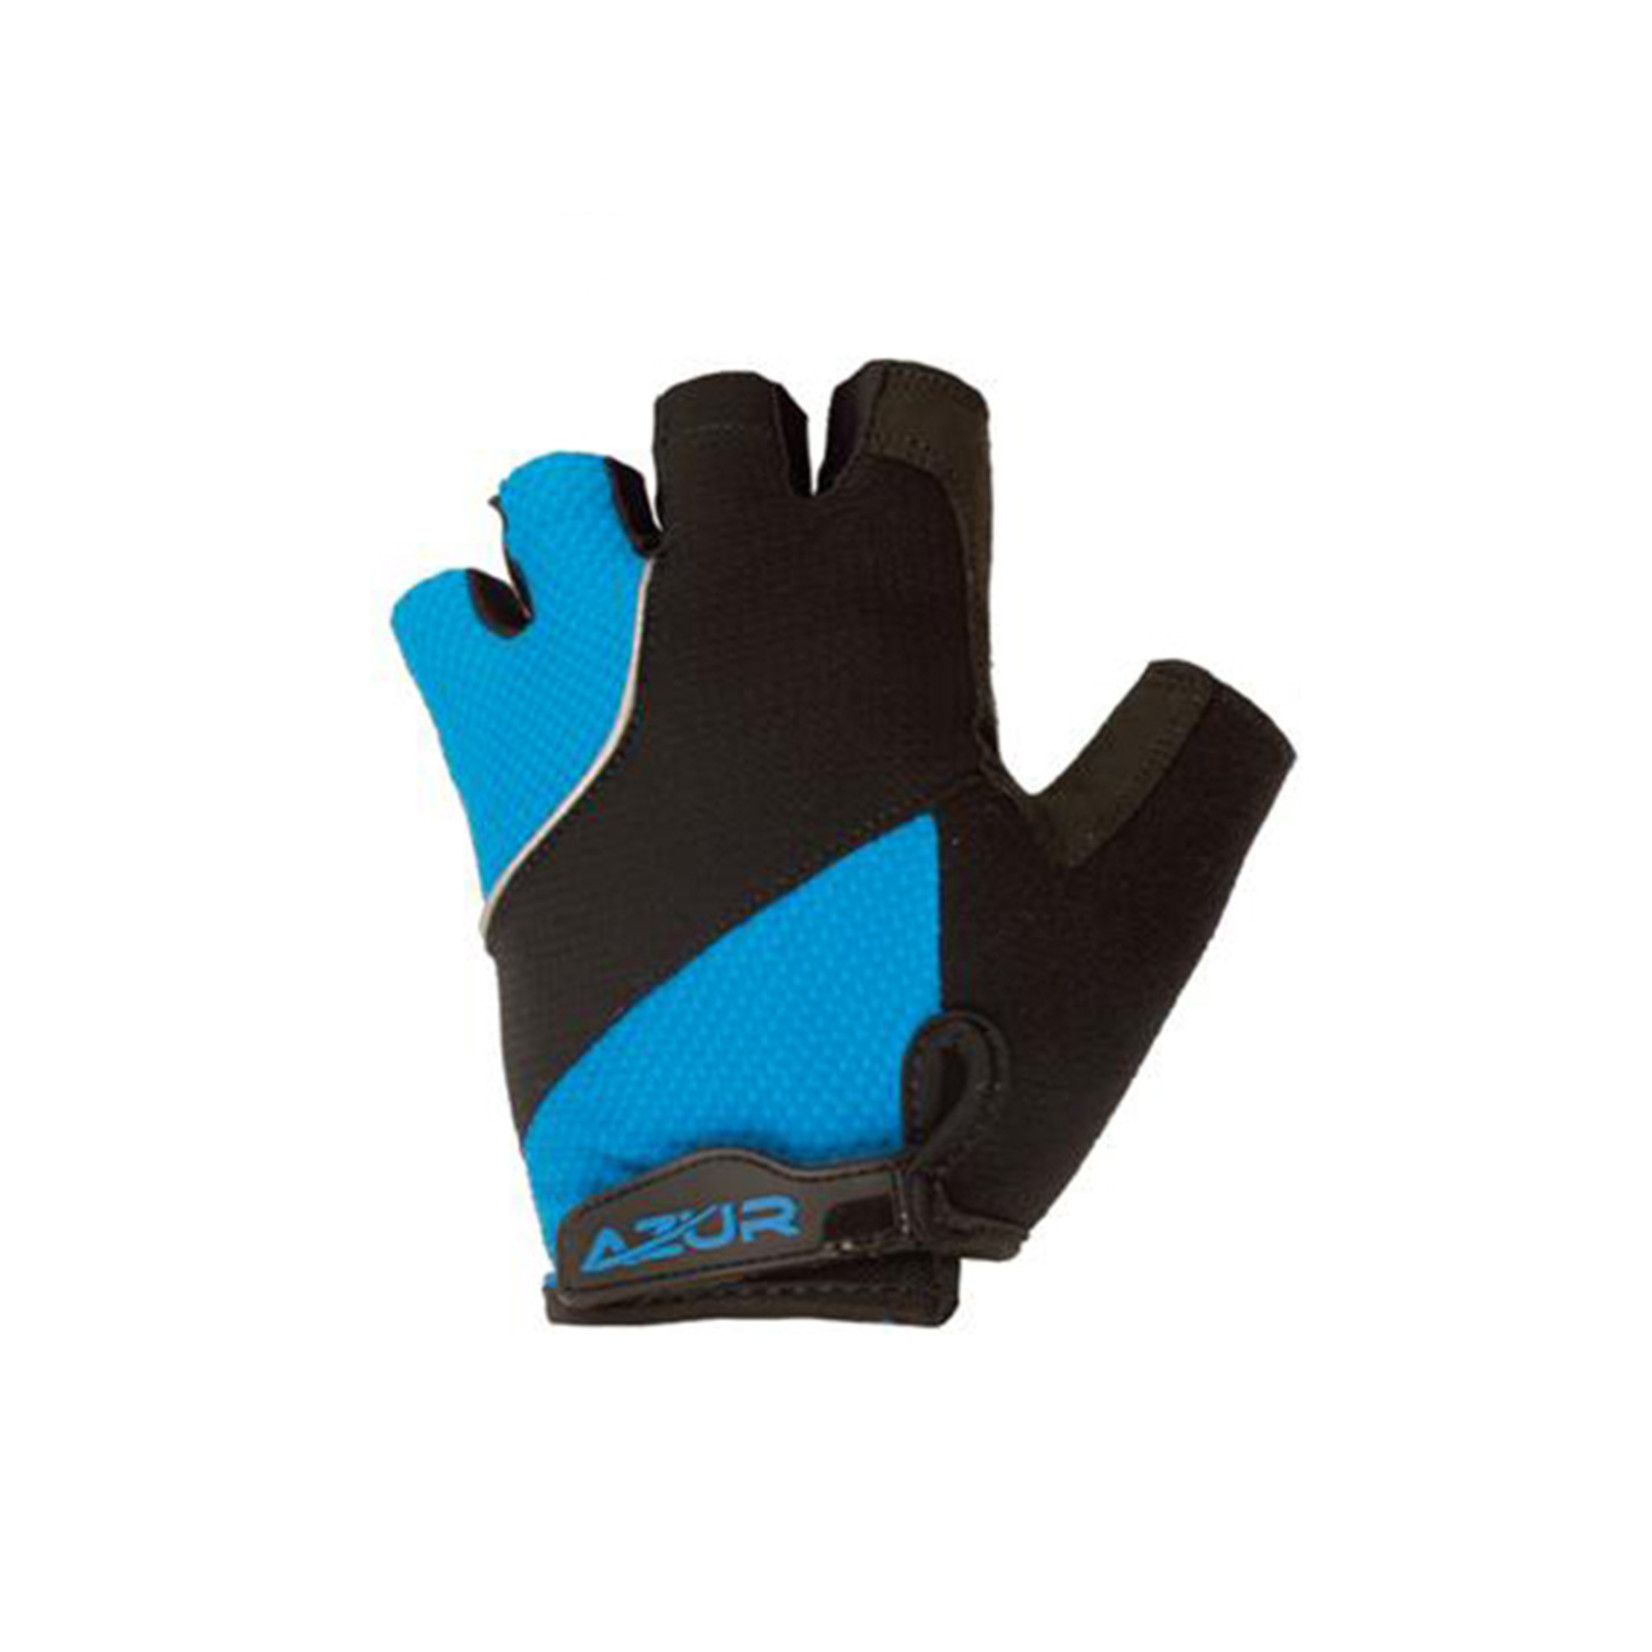 Azur Azur Bike/Cycling Glove - S6 Series - Terry Towel Thumb Wipe - Blue - Small